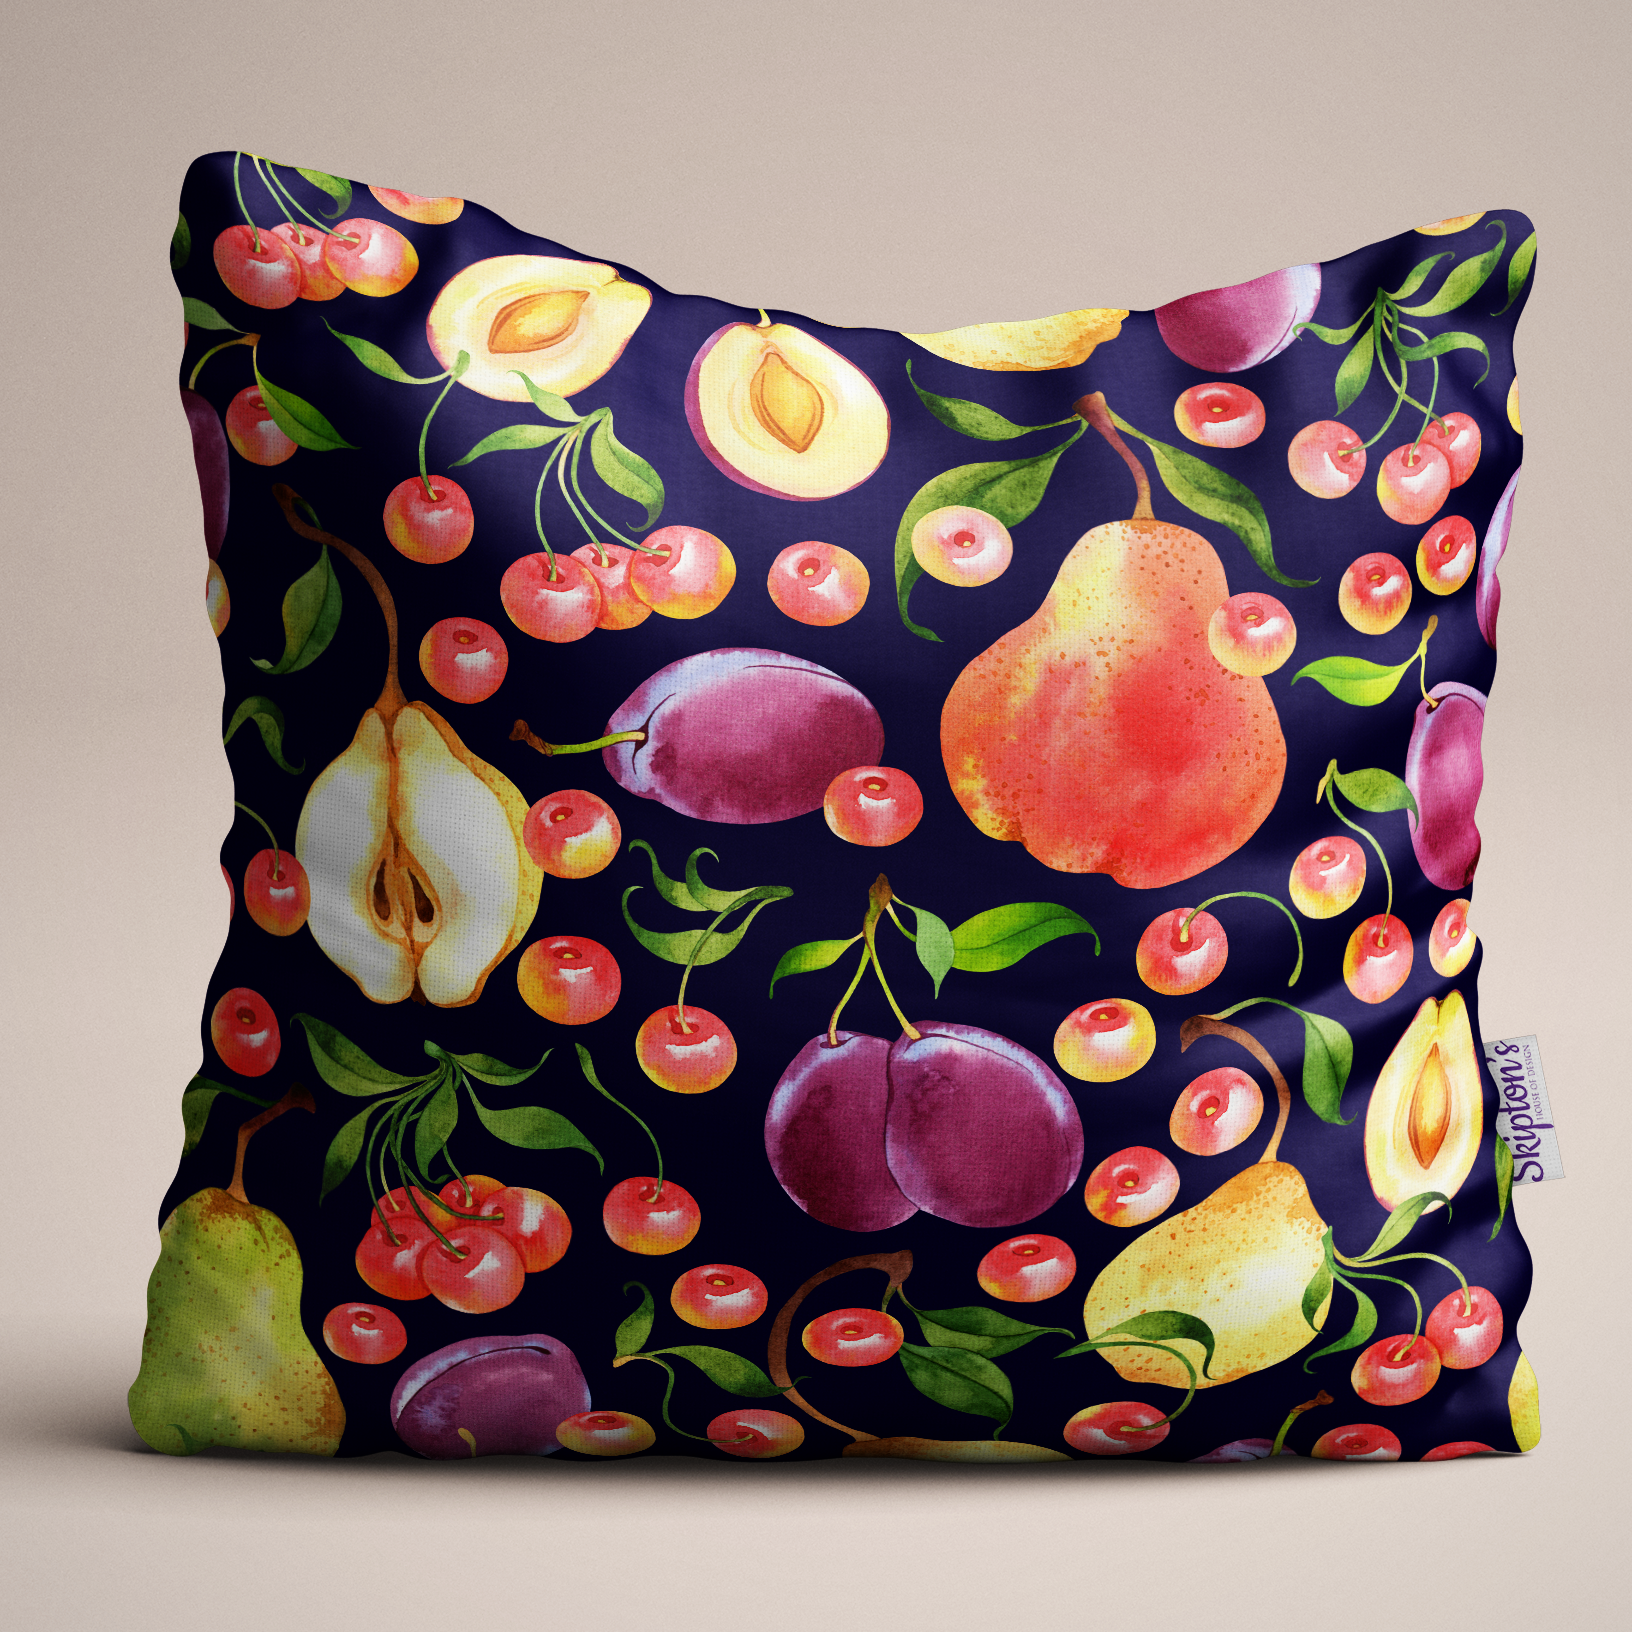 Plum and Pear design Luxury Linen Cushion